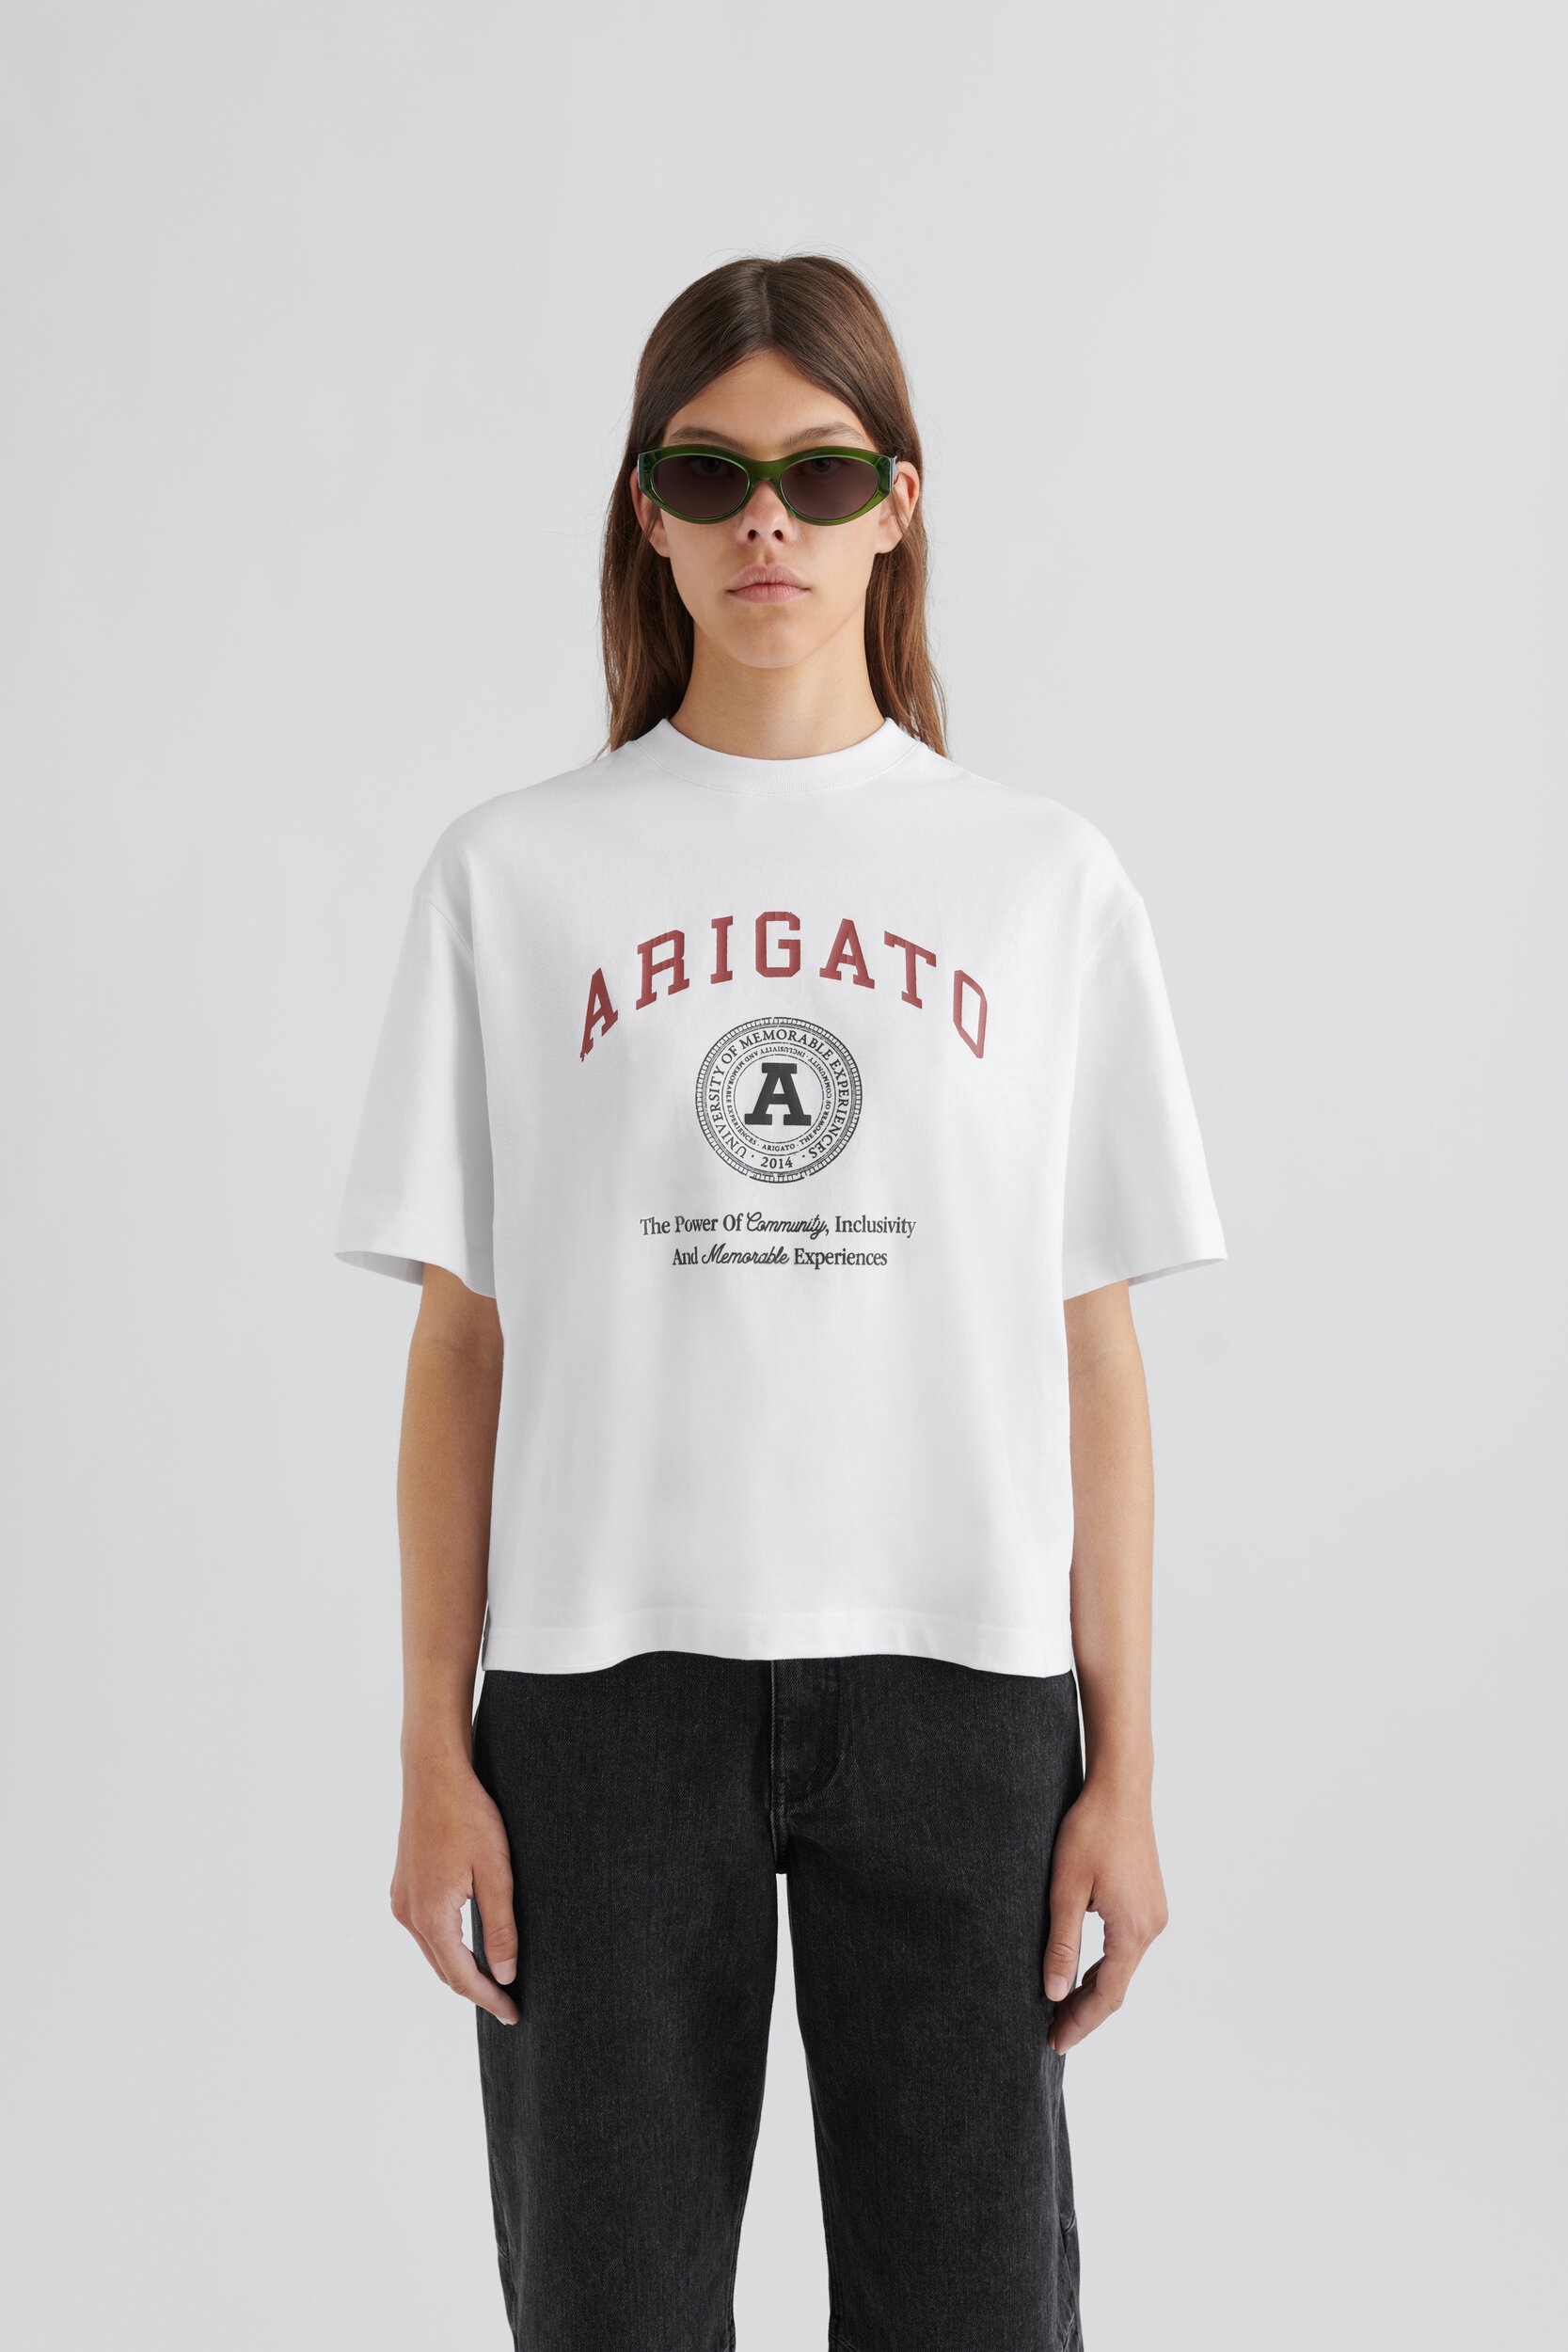 Arigato University T-Shirt - 2